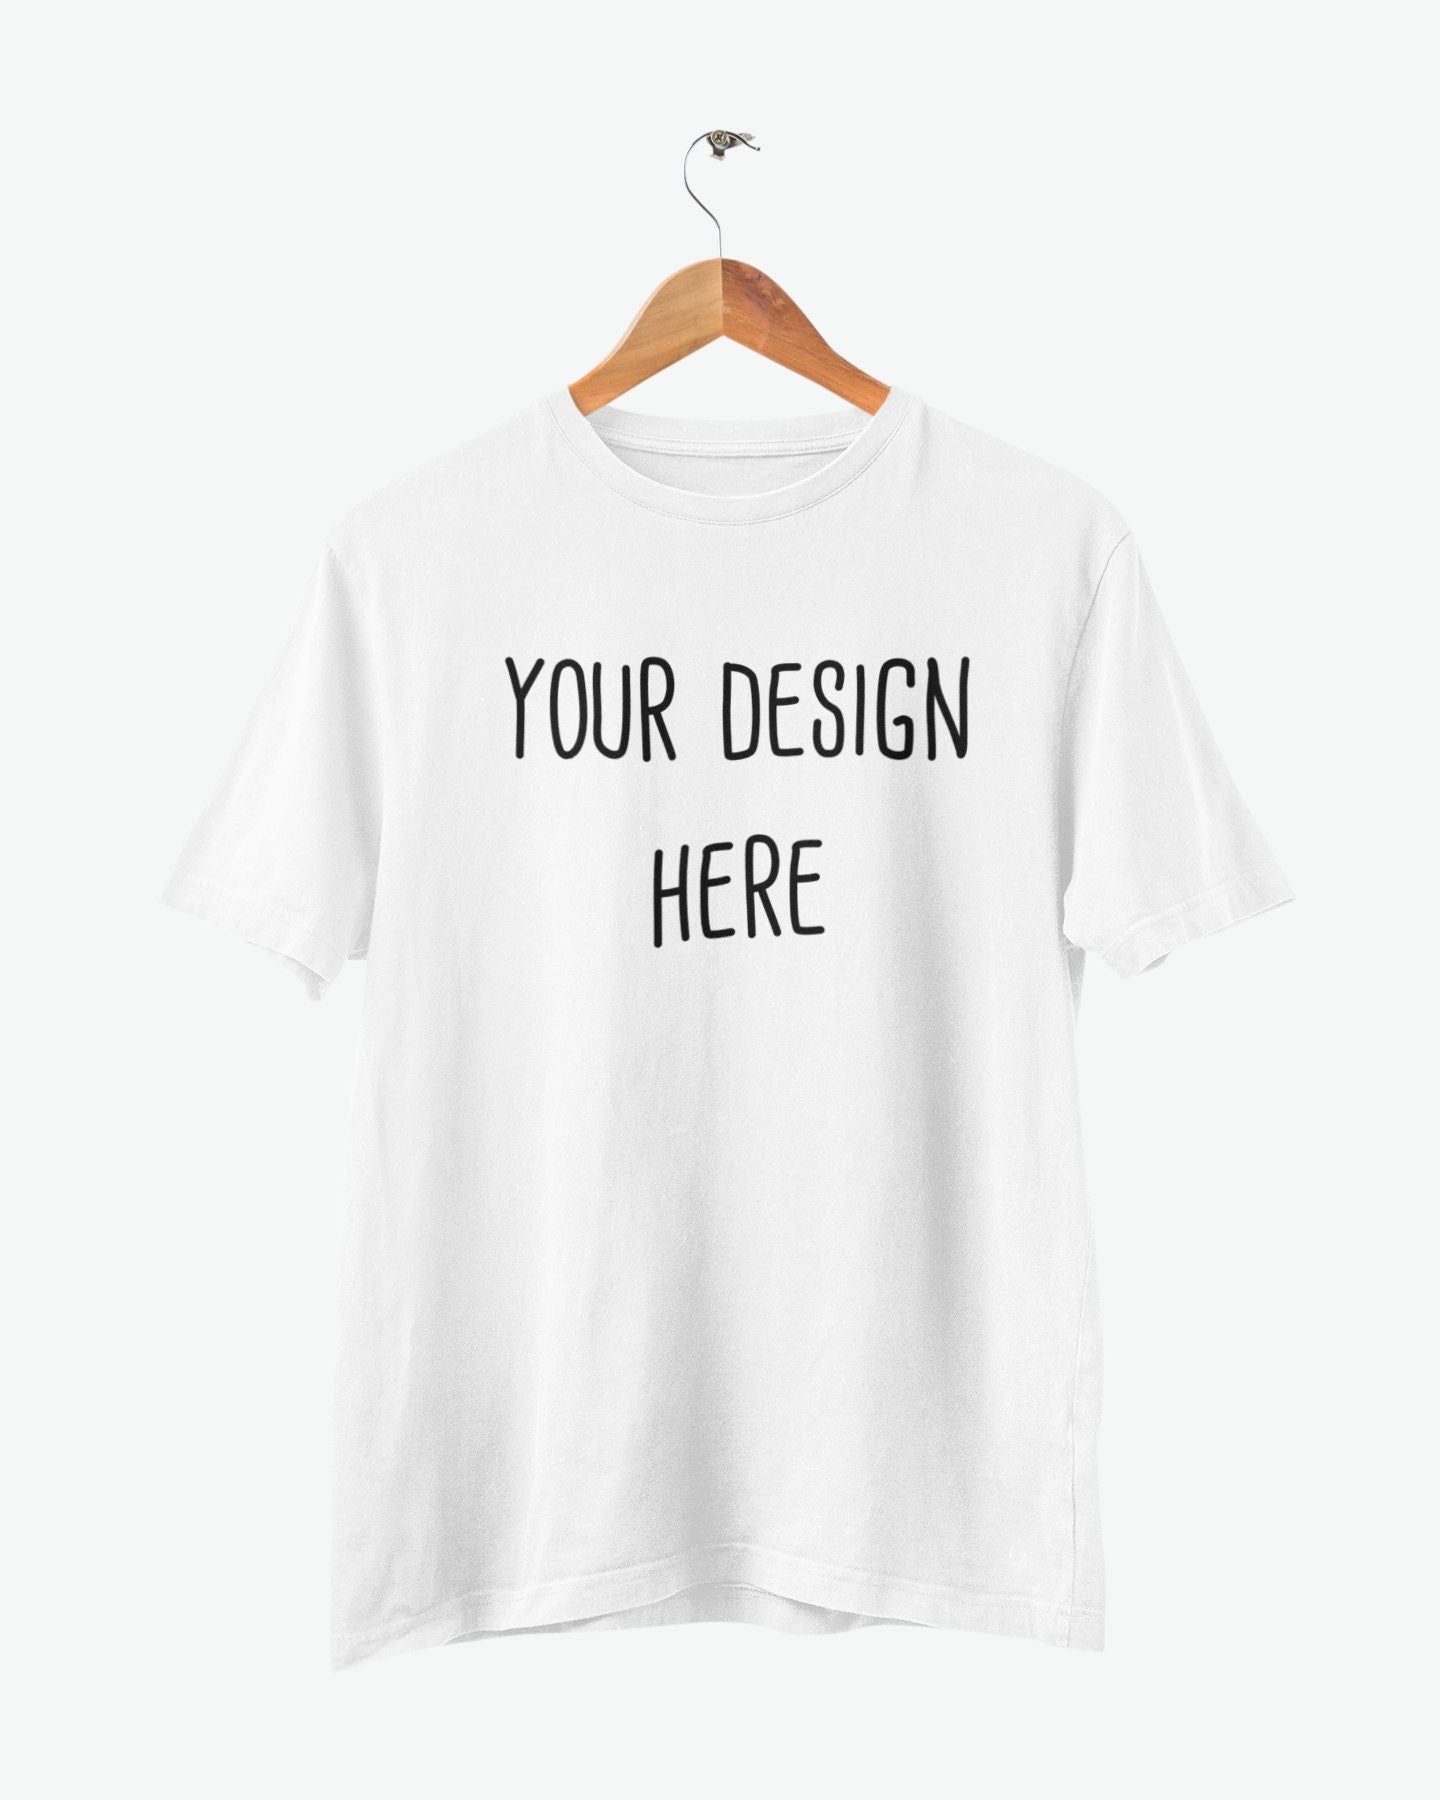 Unisex Personalised T-Shirt, Your Text, Any Text, Your Design here, Custom t-shirt, bespoke t-shirt, men's t-shirt, women's T-shirt